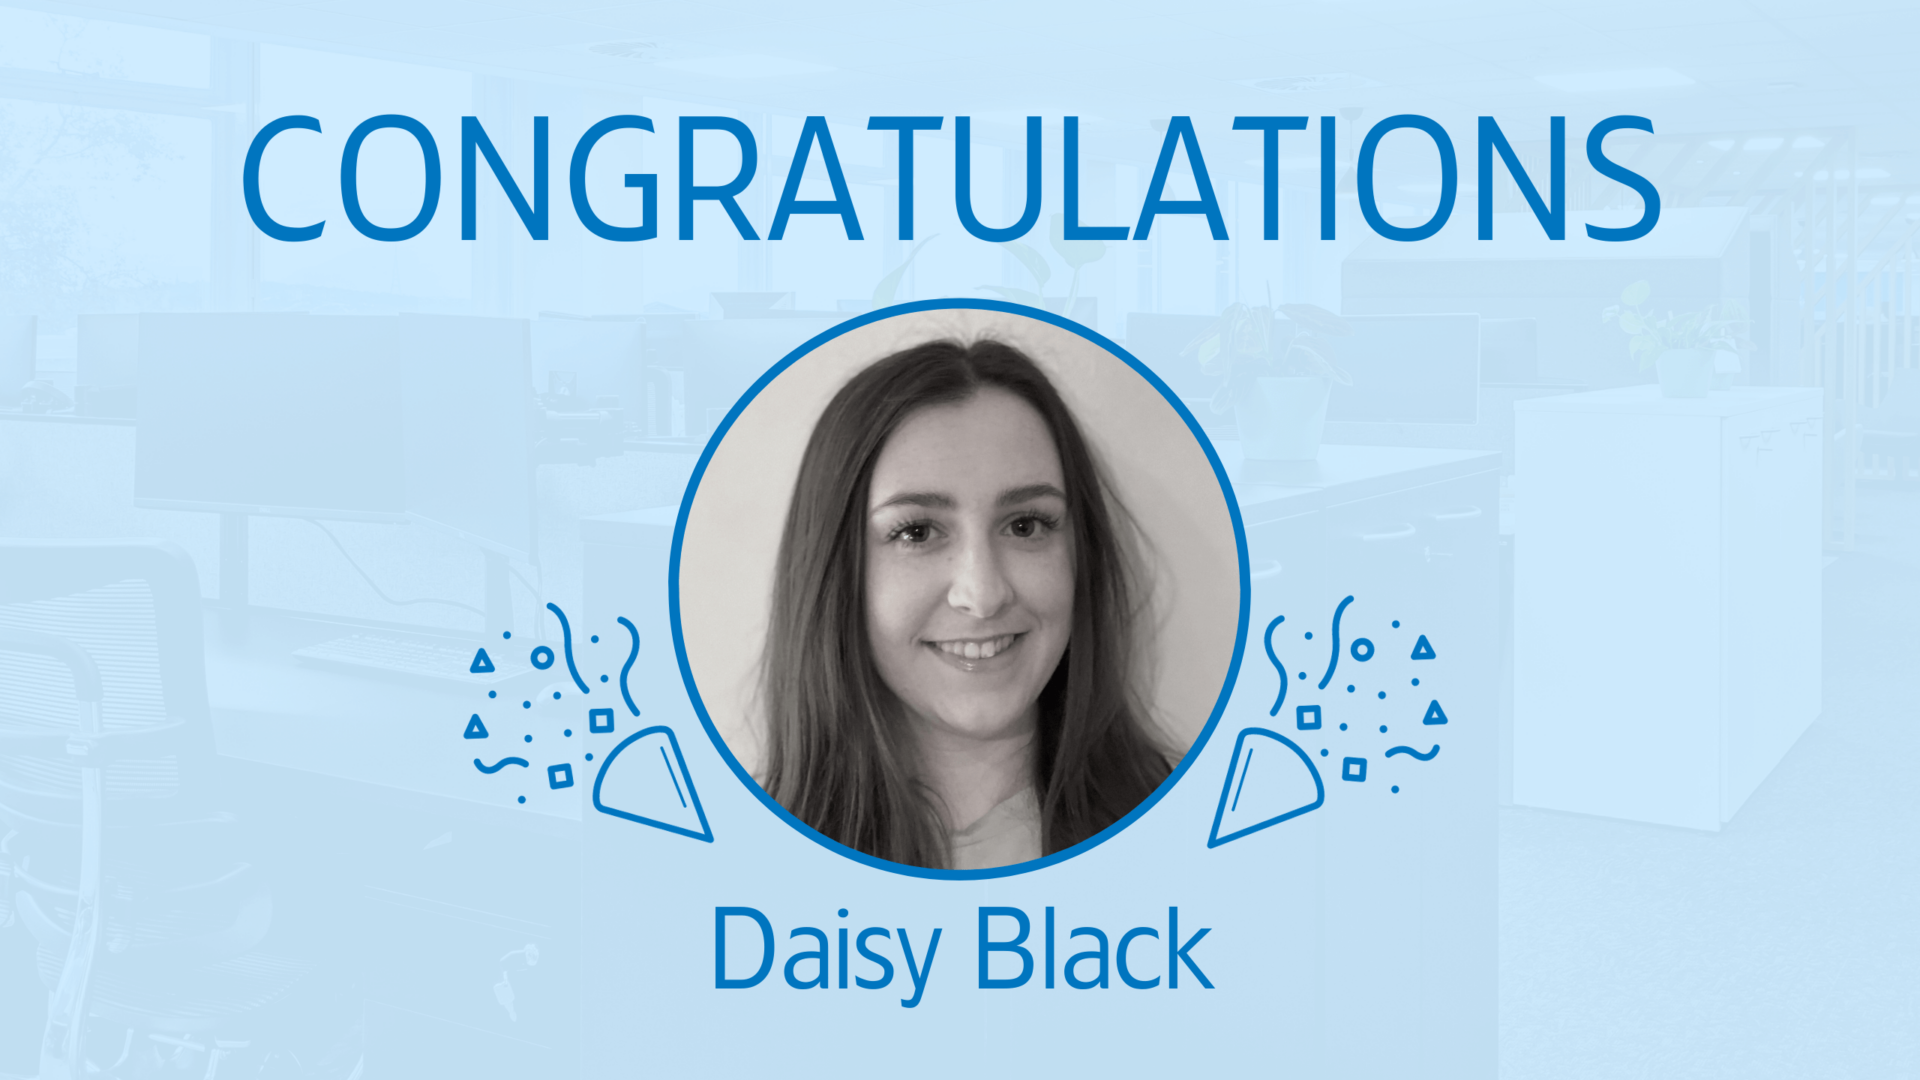 Congratulations to Daisy Black